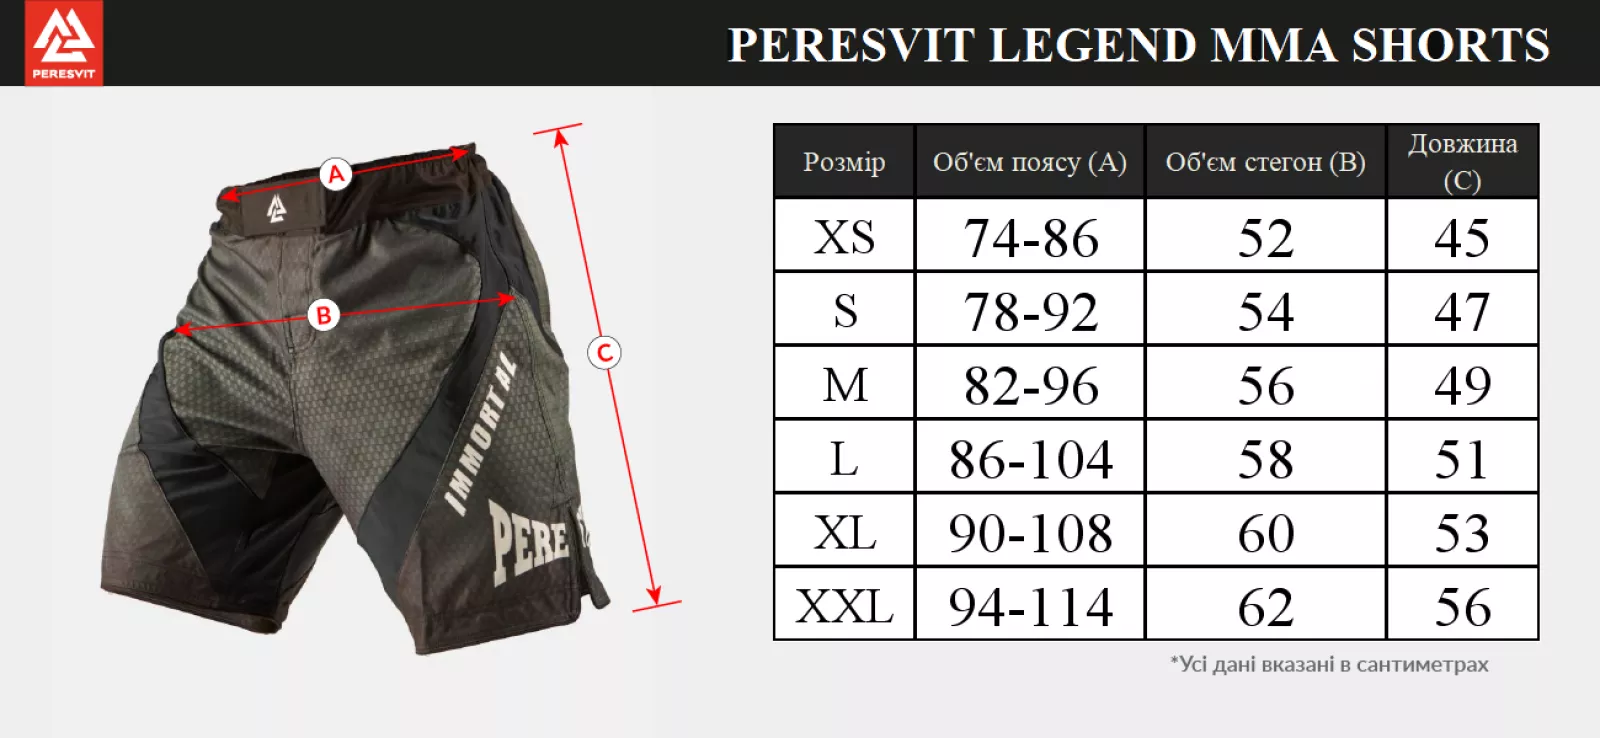 Шорты Peresvit Phantom Jitser Legend Fight Shorts Размер: XS